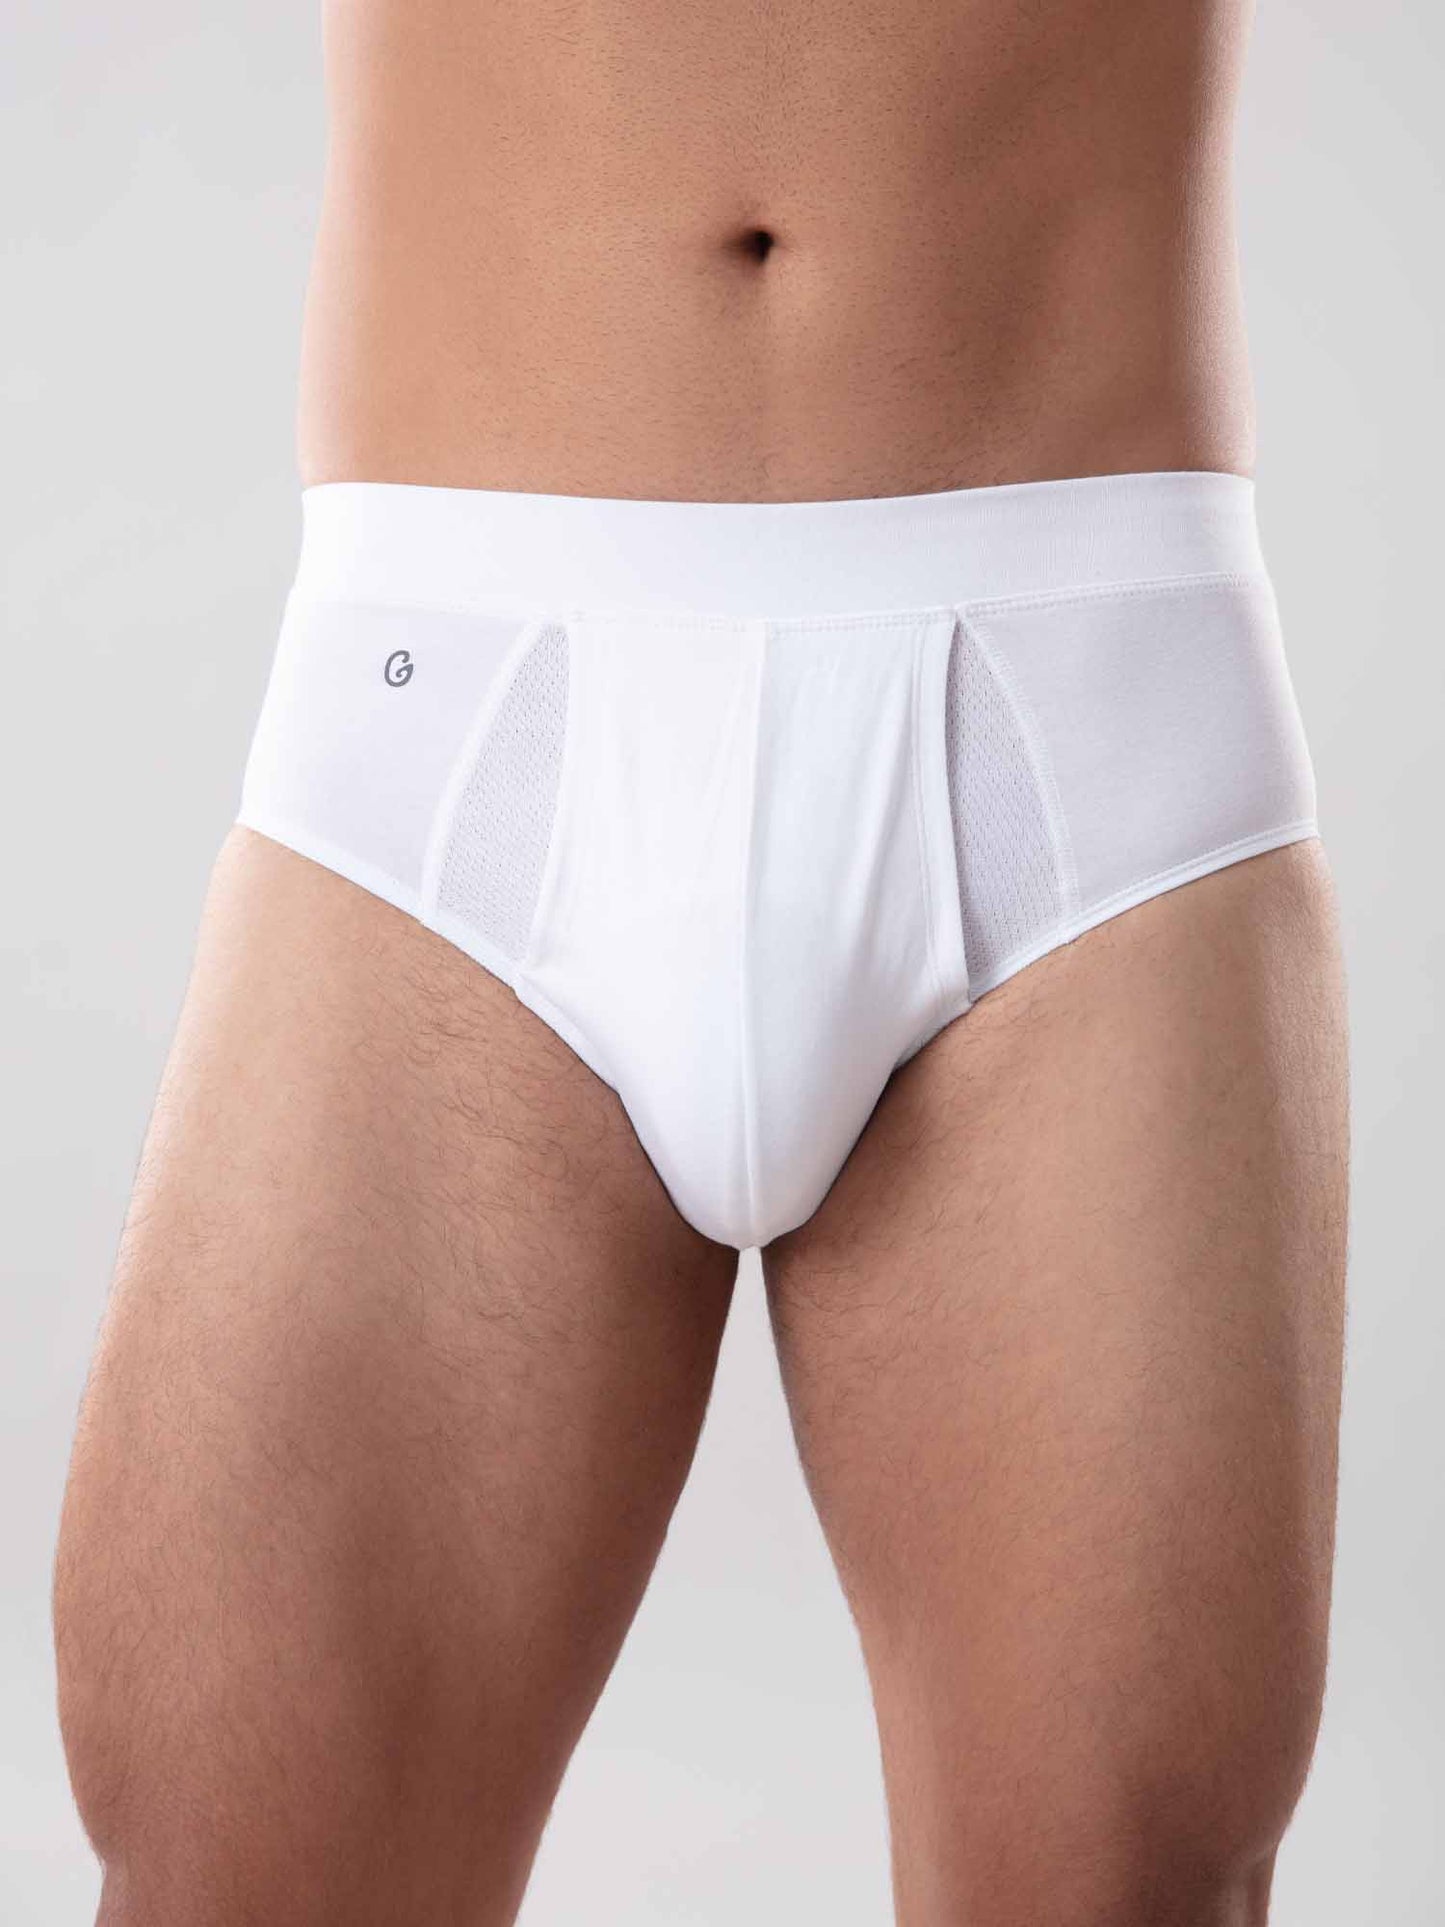 Apixt men's underwear incorporates silver for odor, sweat, and temperature  control » Gadget Flow